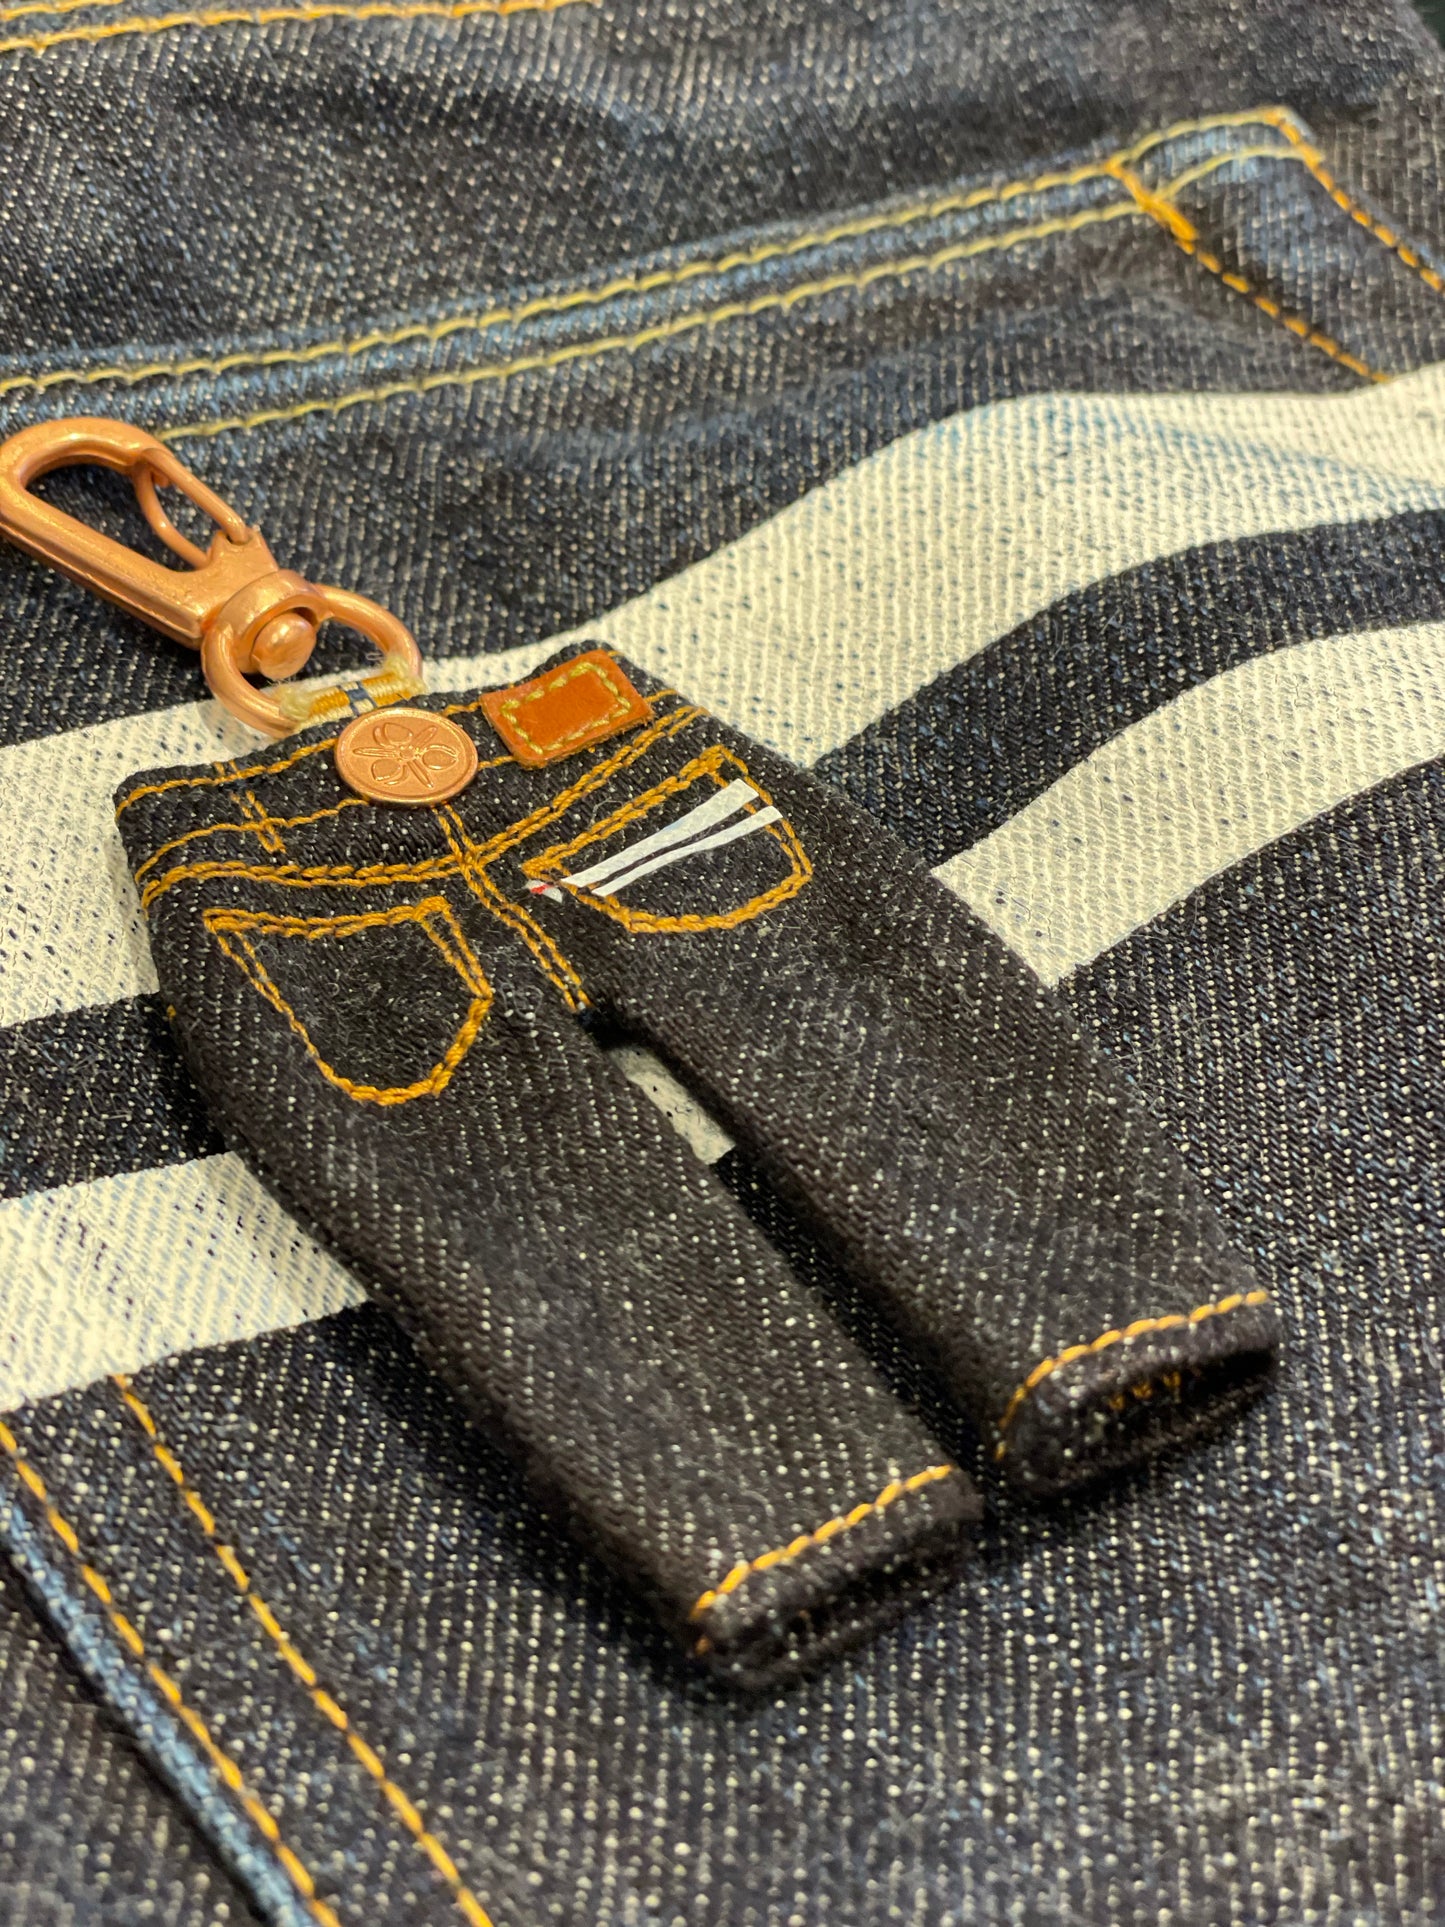 Momotaro - Mini Jeans Key Holder